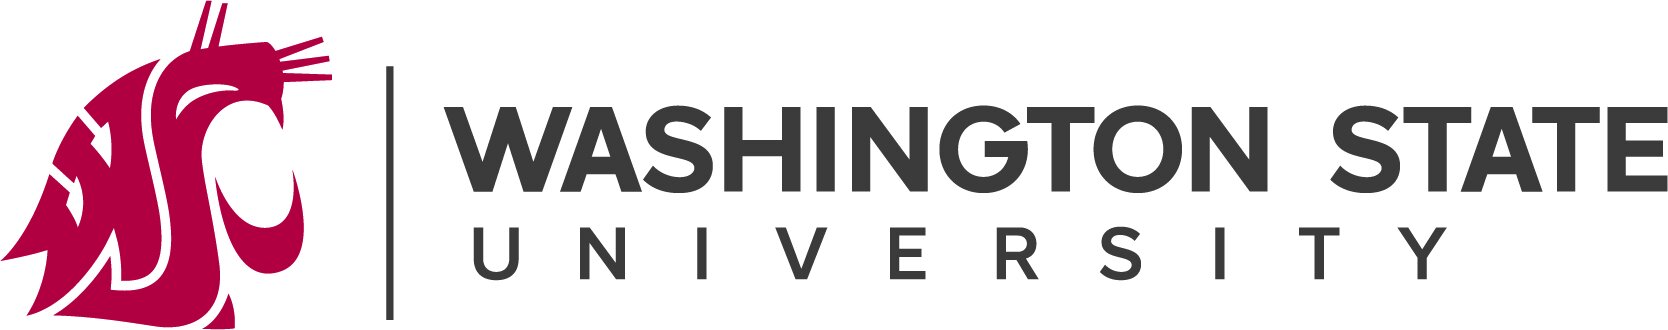 WSU new logo.jpg